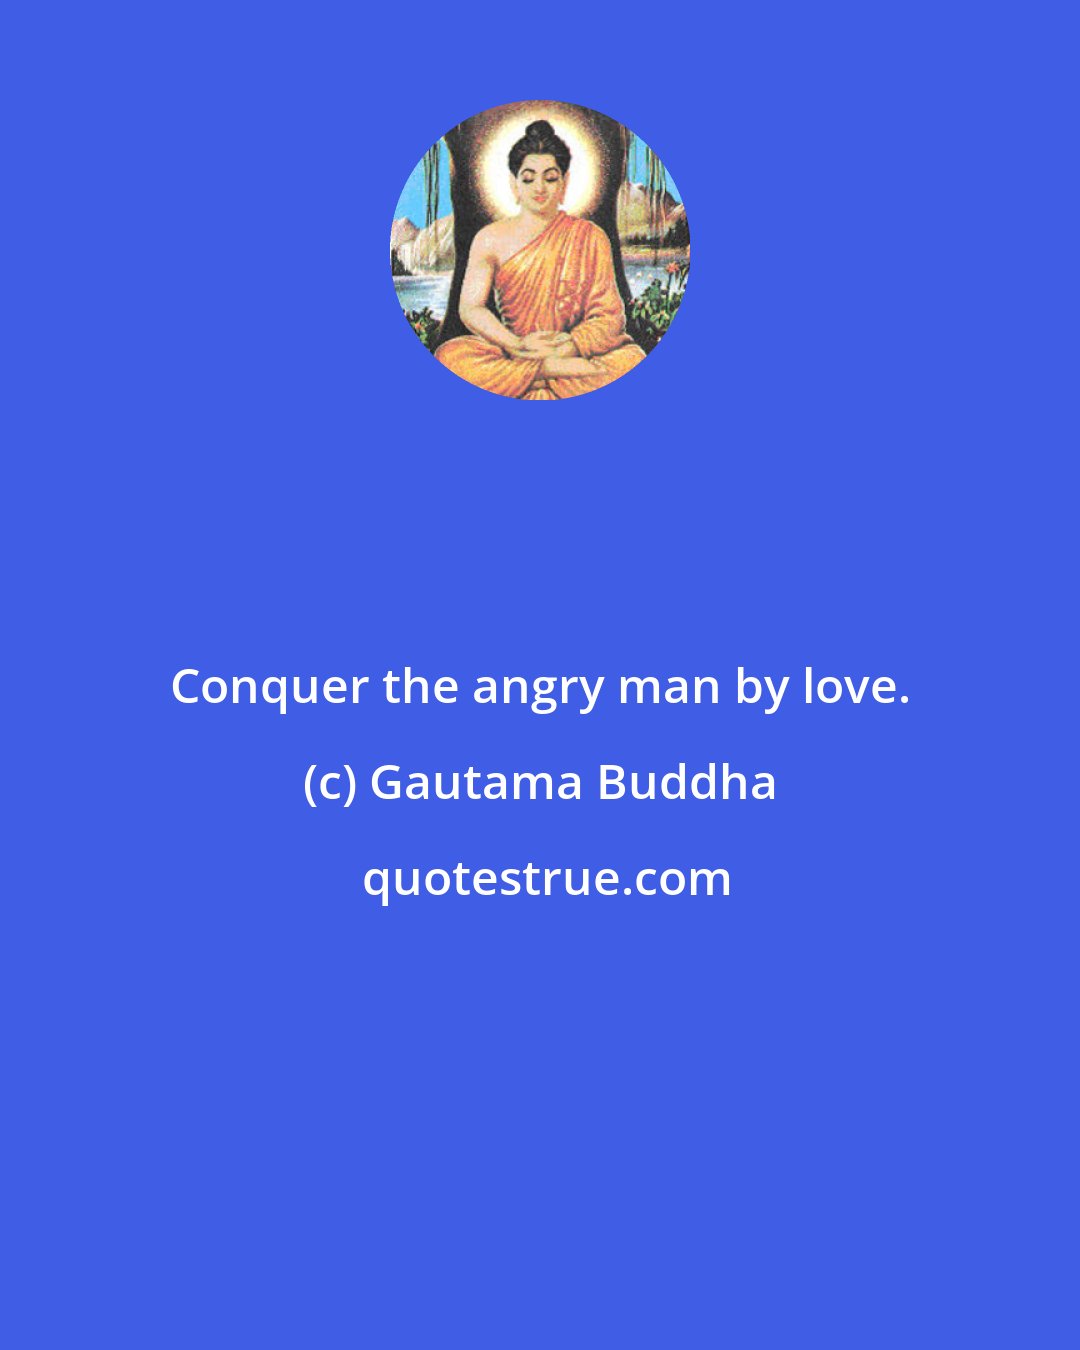 Gautama Buddha: Conquer the angry man by love.